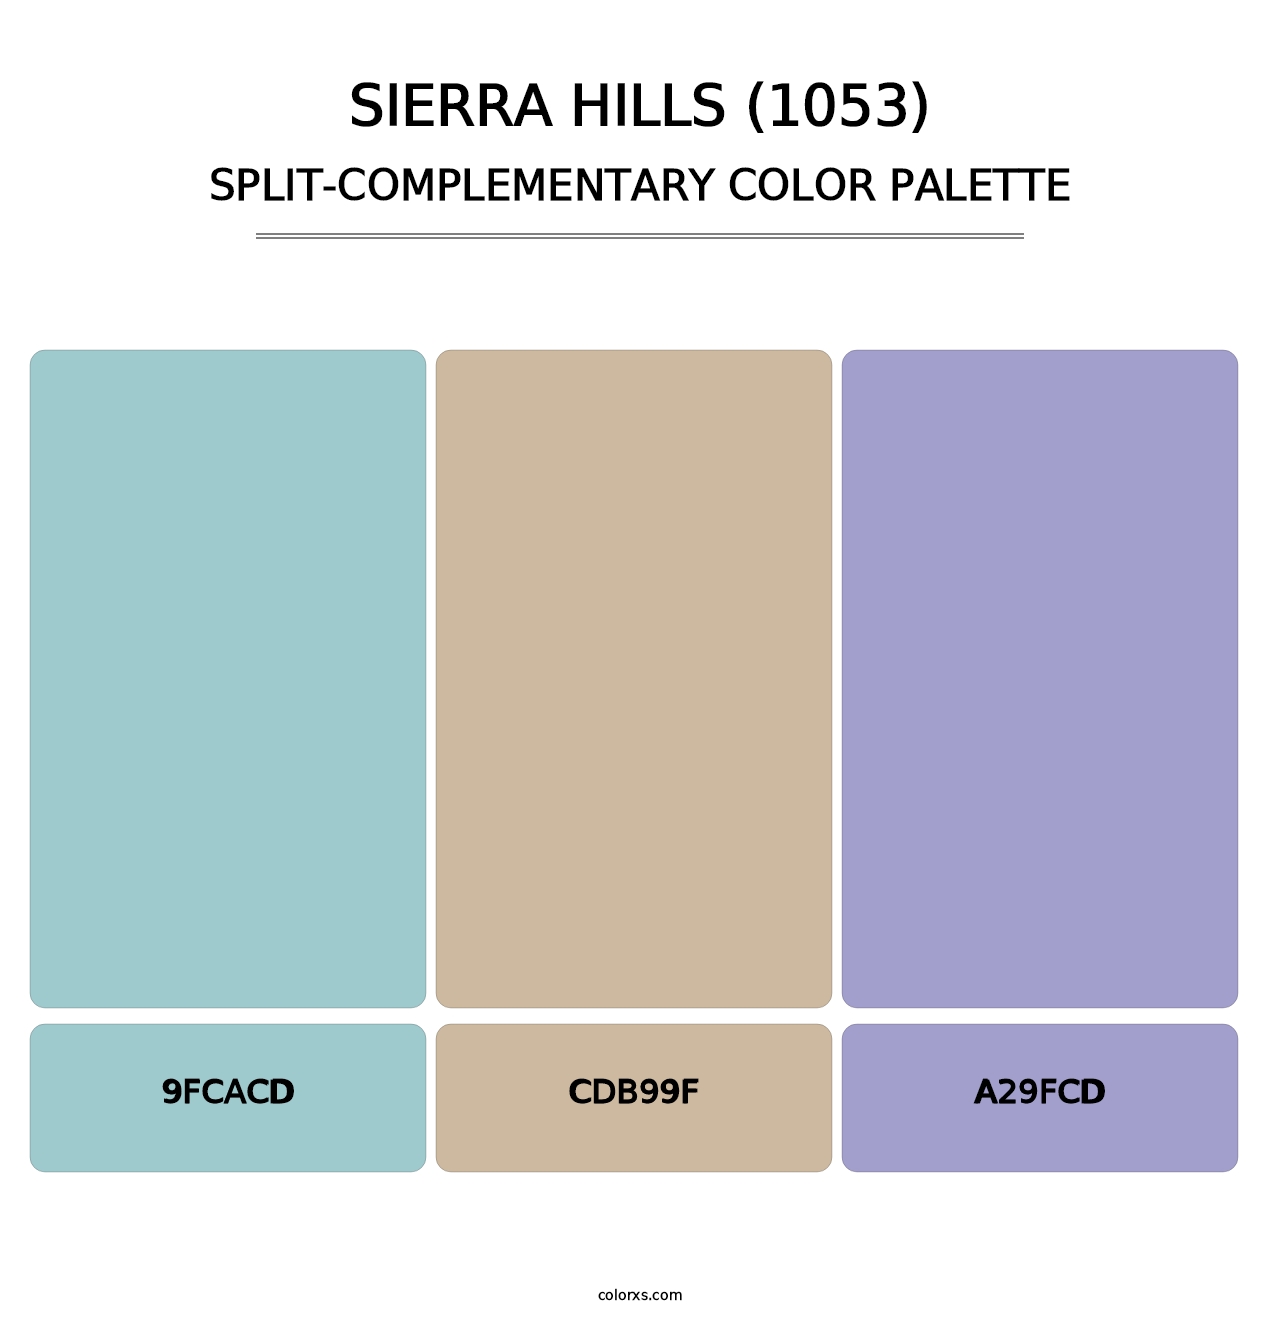 Sierra Hills (1053) - Split-Complementary Color Palette